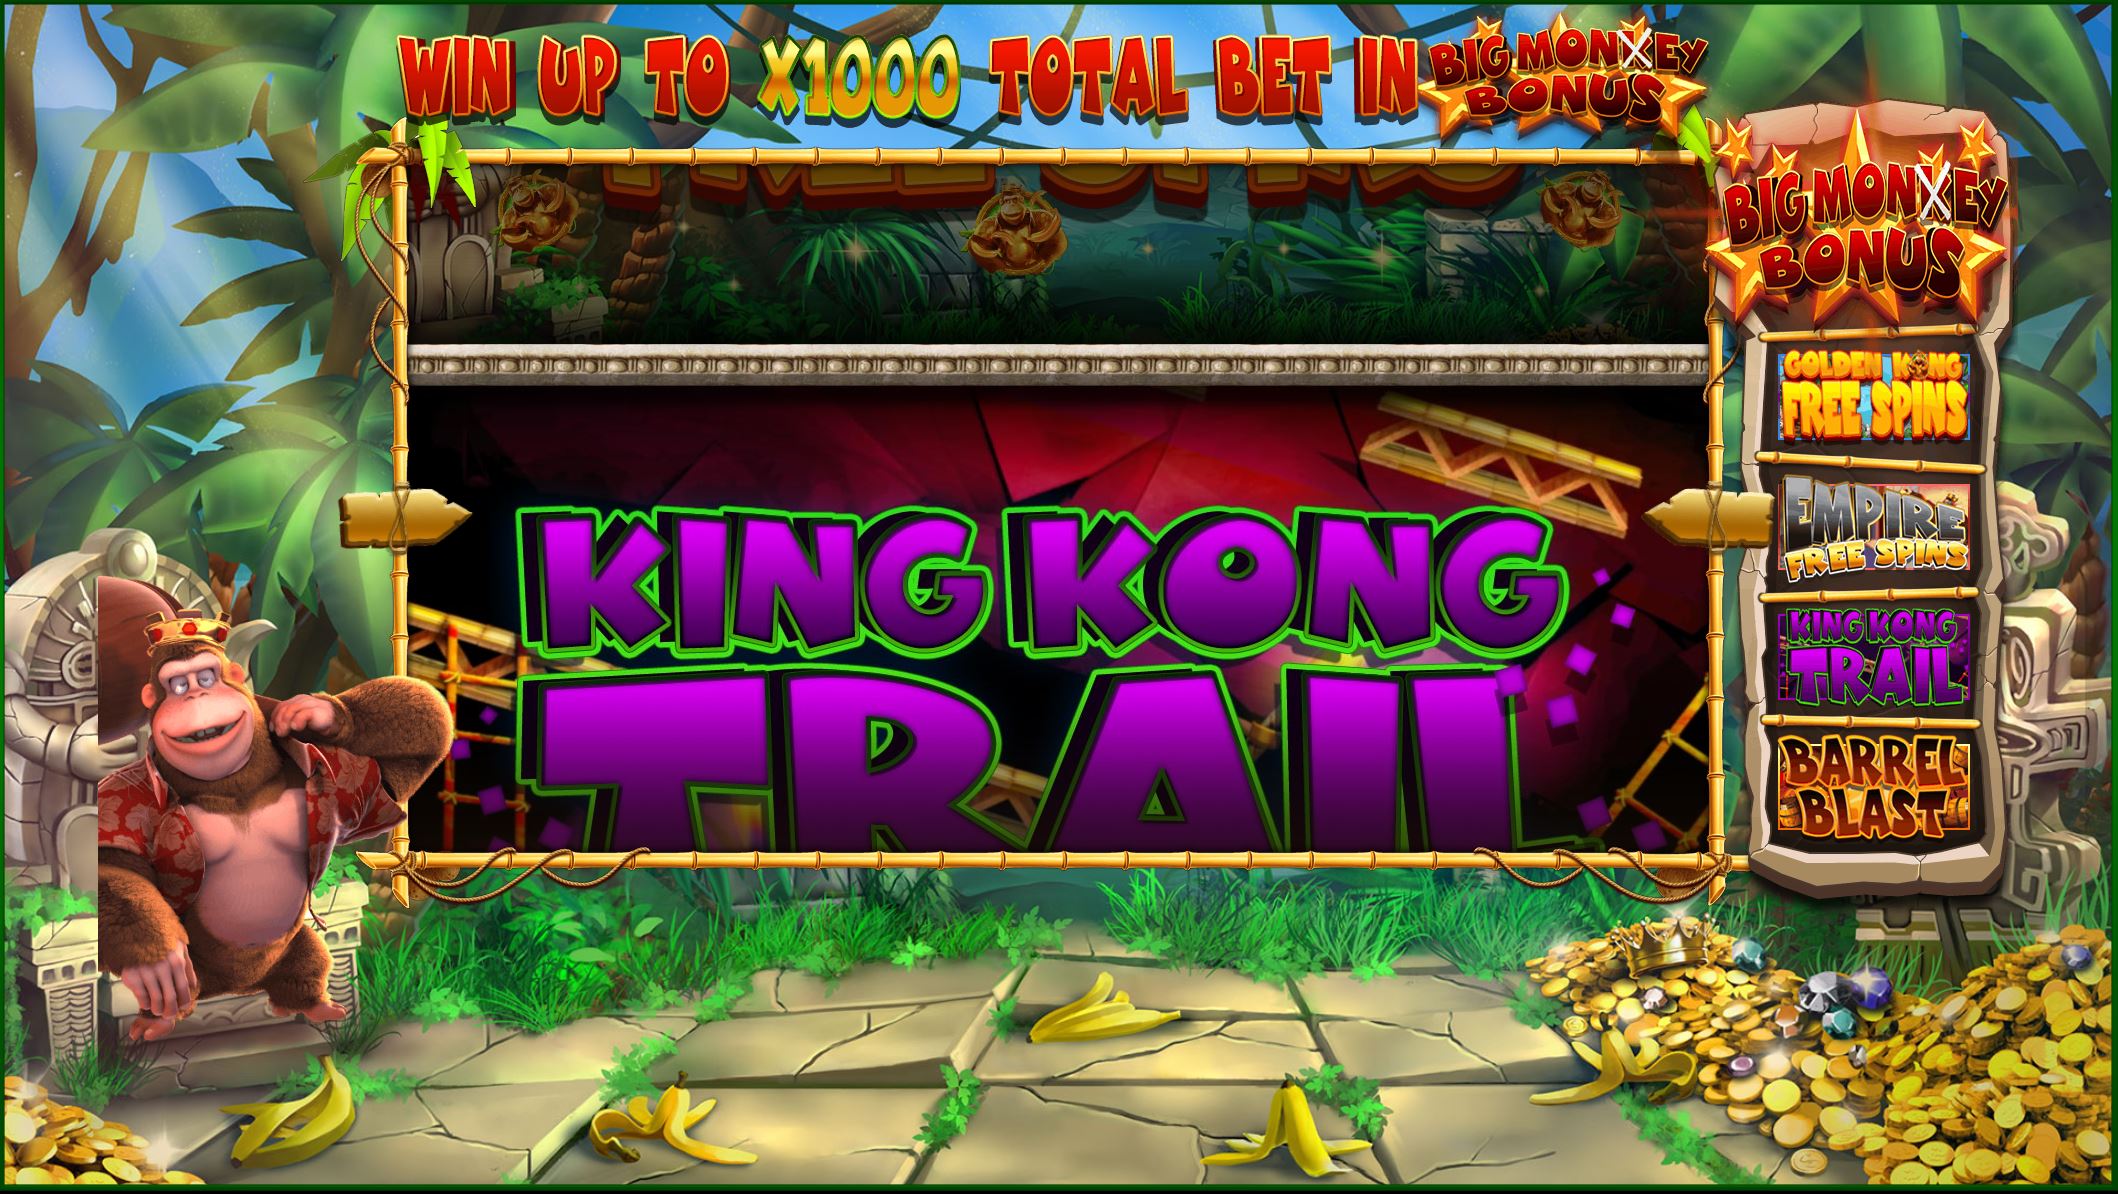 King kong cash free play demo online